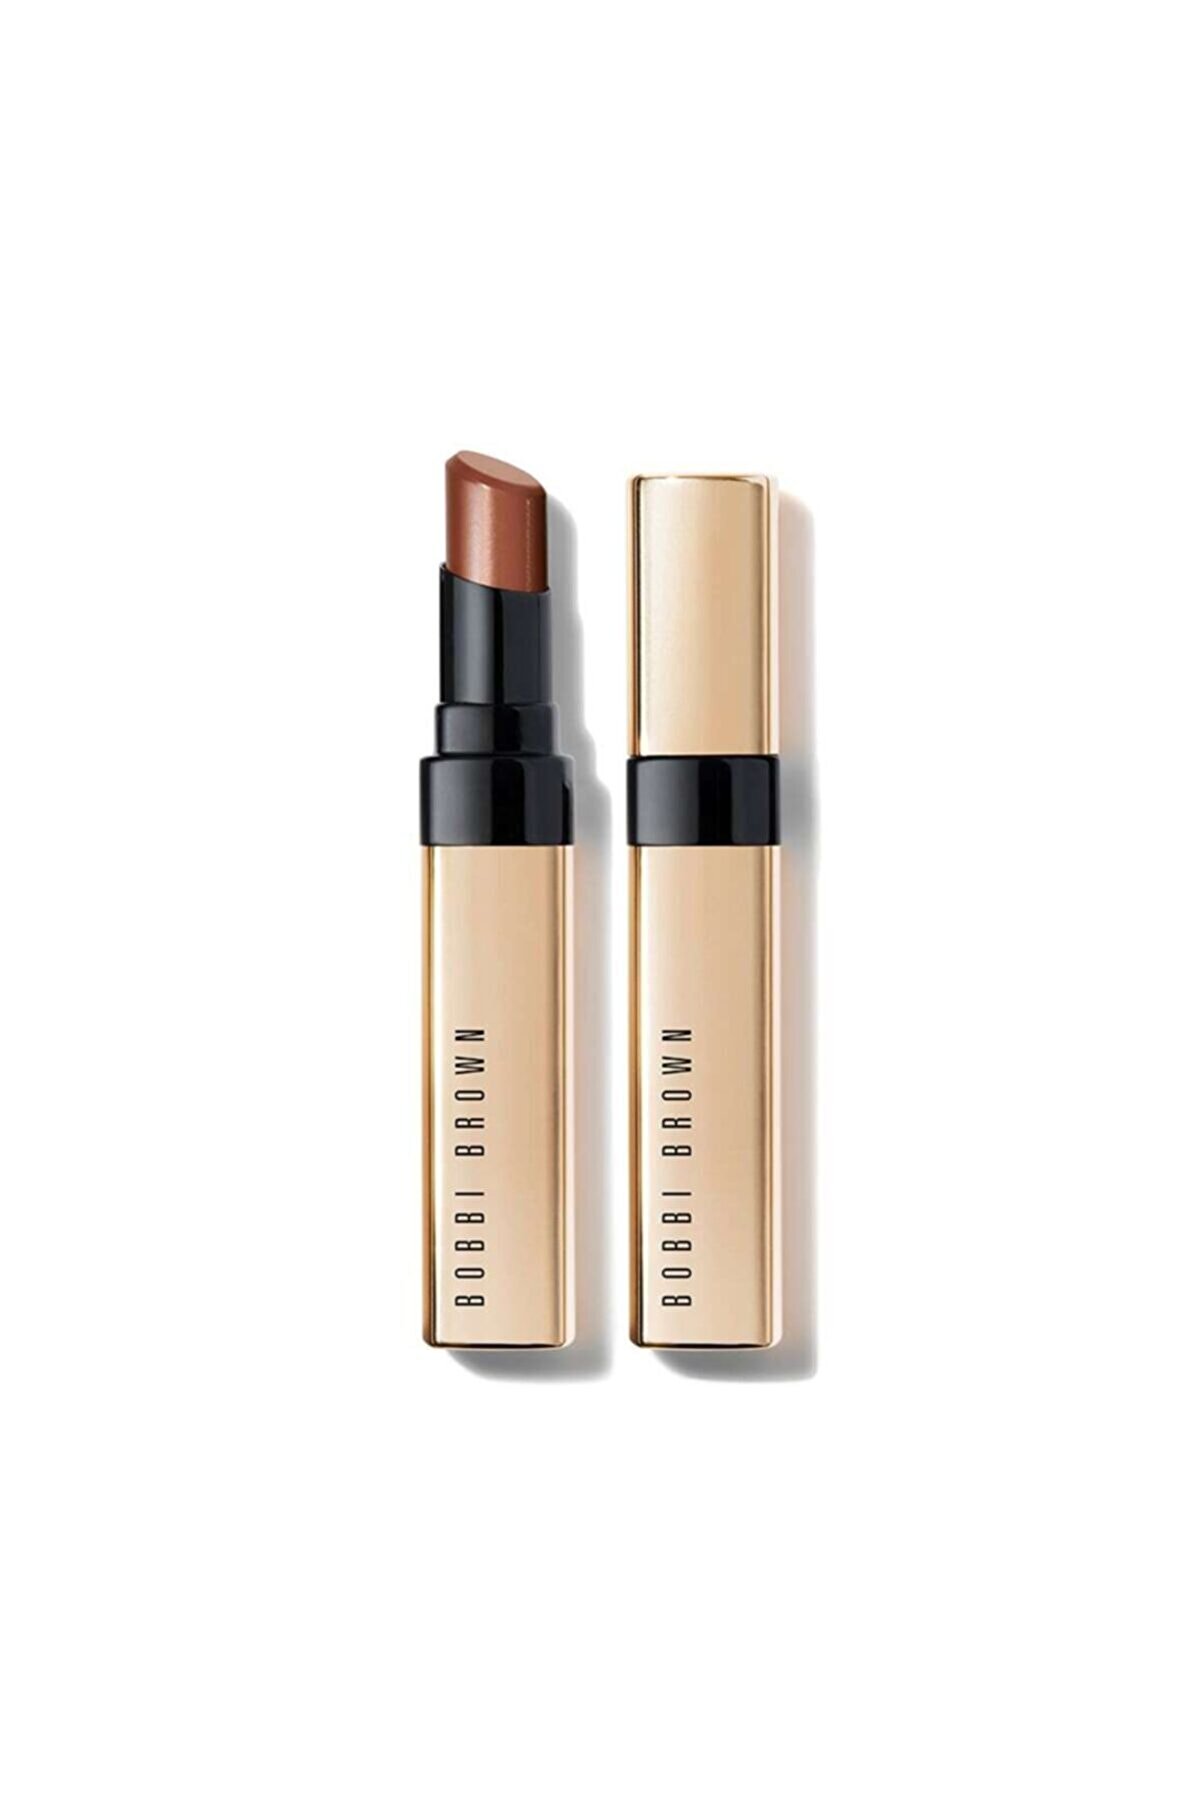 Bobbi Brown Luxe Shine Intense Lipstick / Ruj Fh19 2.3g Bold Honey 716170225470